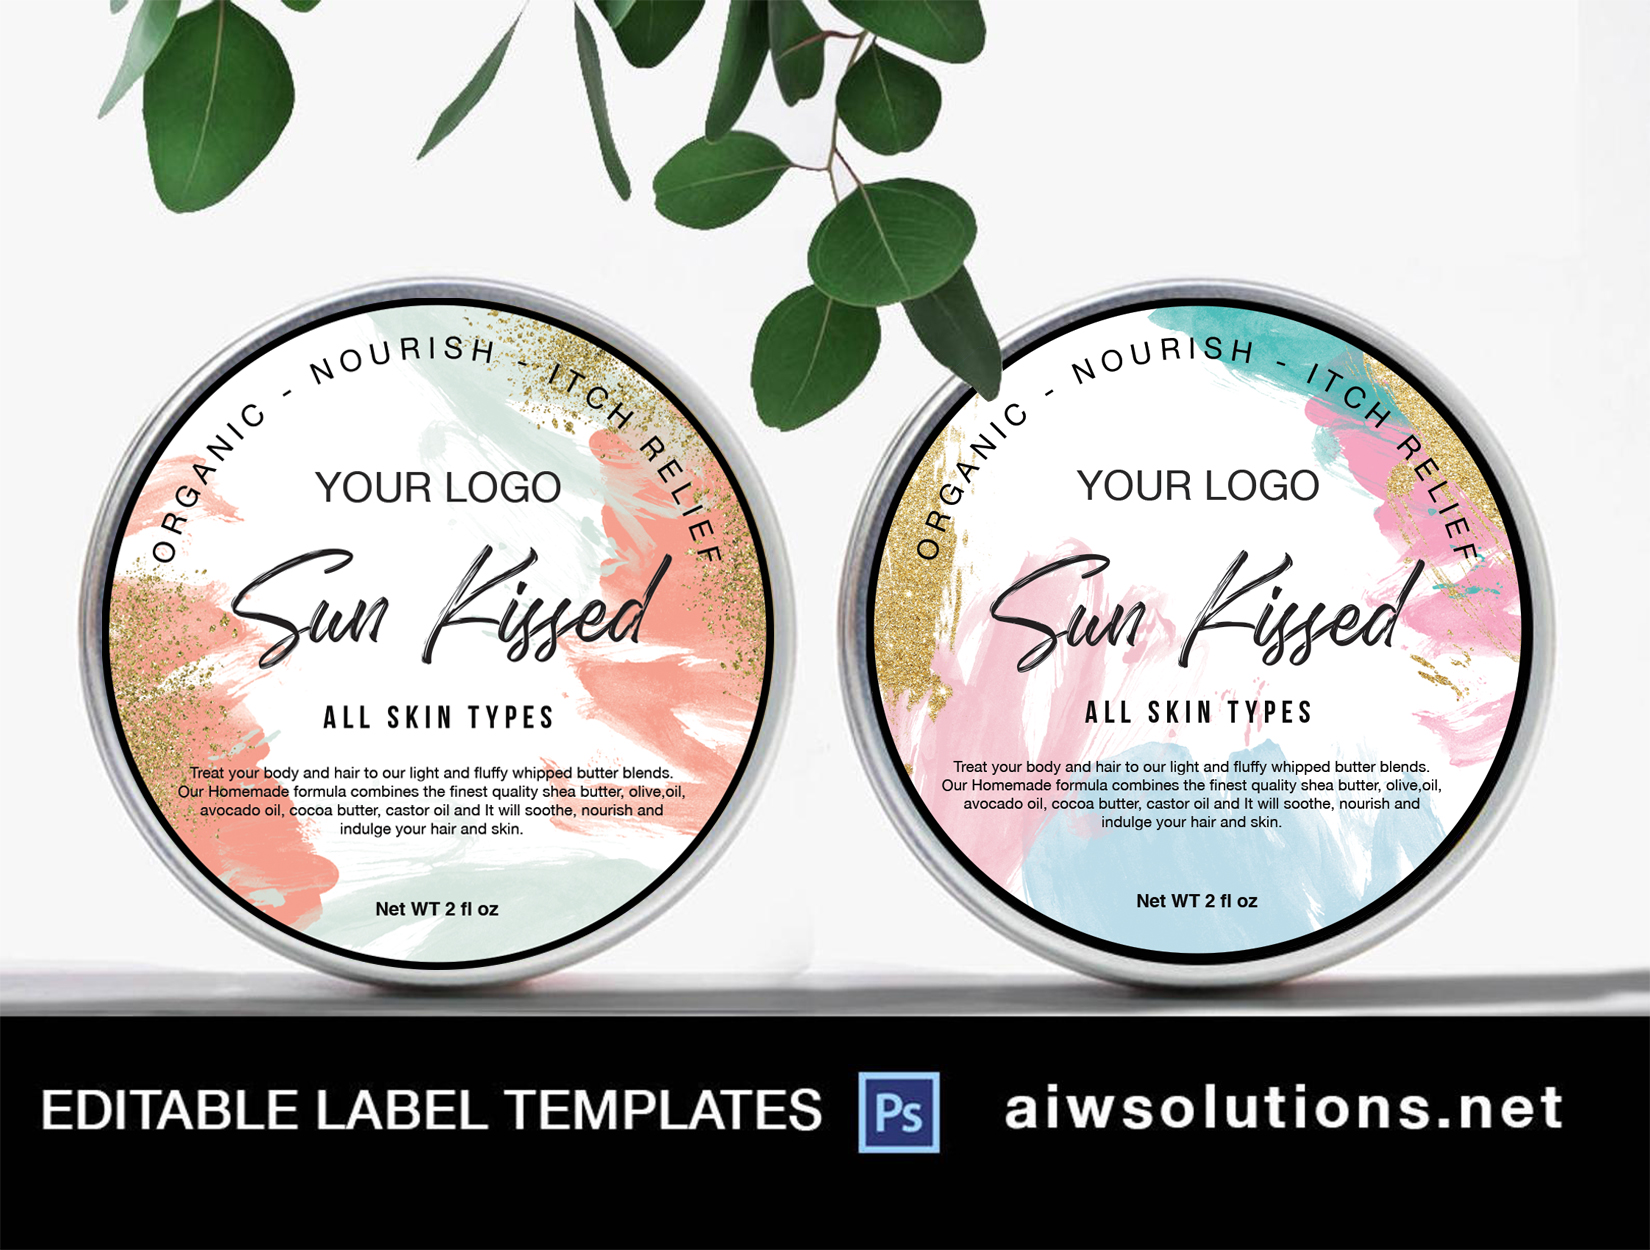 Handmade Soap Stickers Labels, Custom Template Body Label